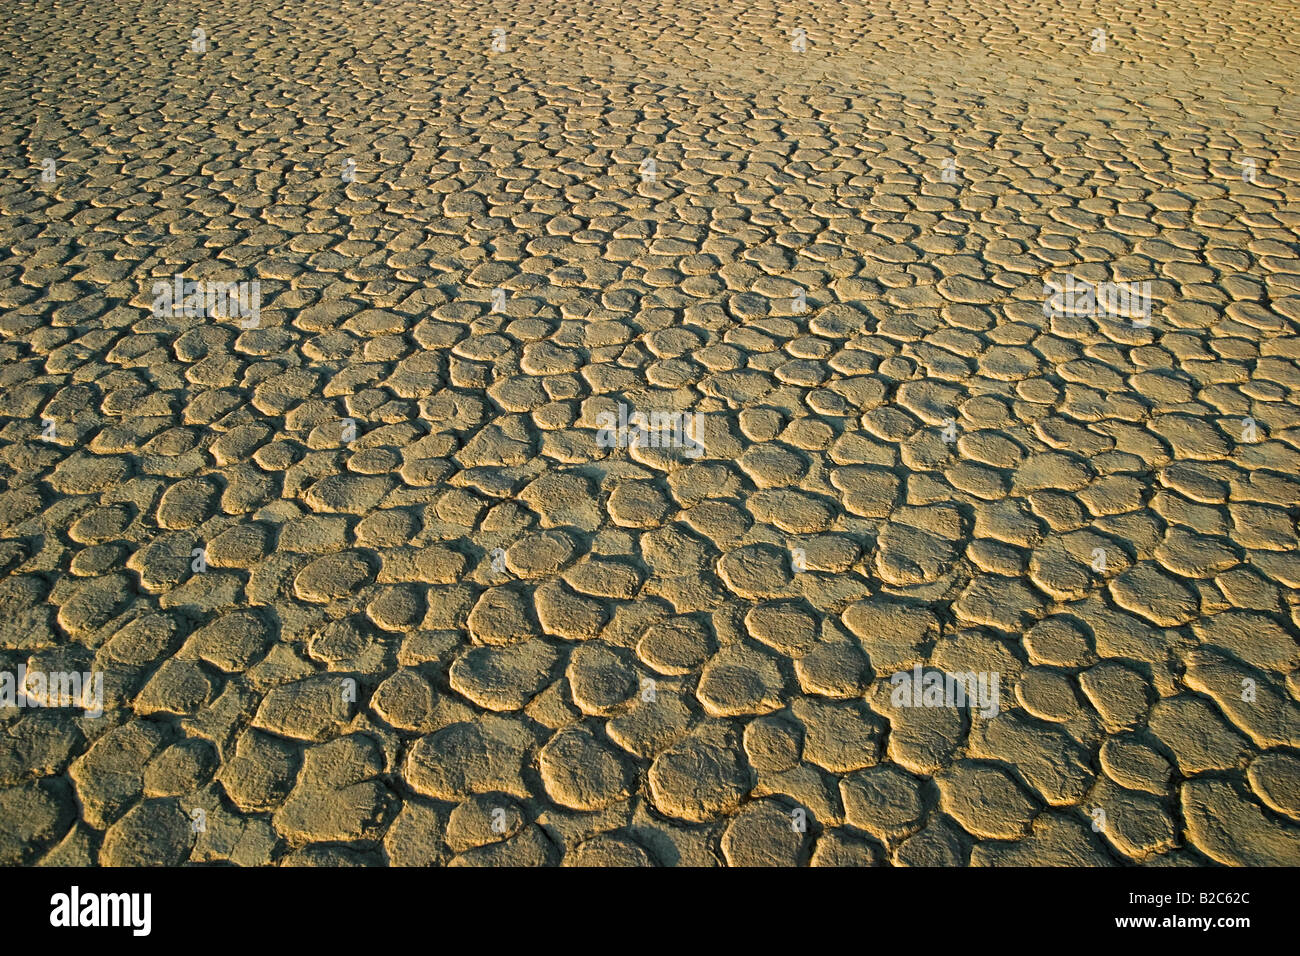 Parched clay soil, Deadvlei, Namib Desert, Namibia, Africa Stock Photo